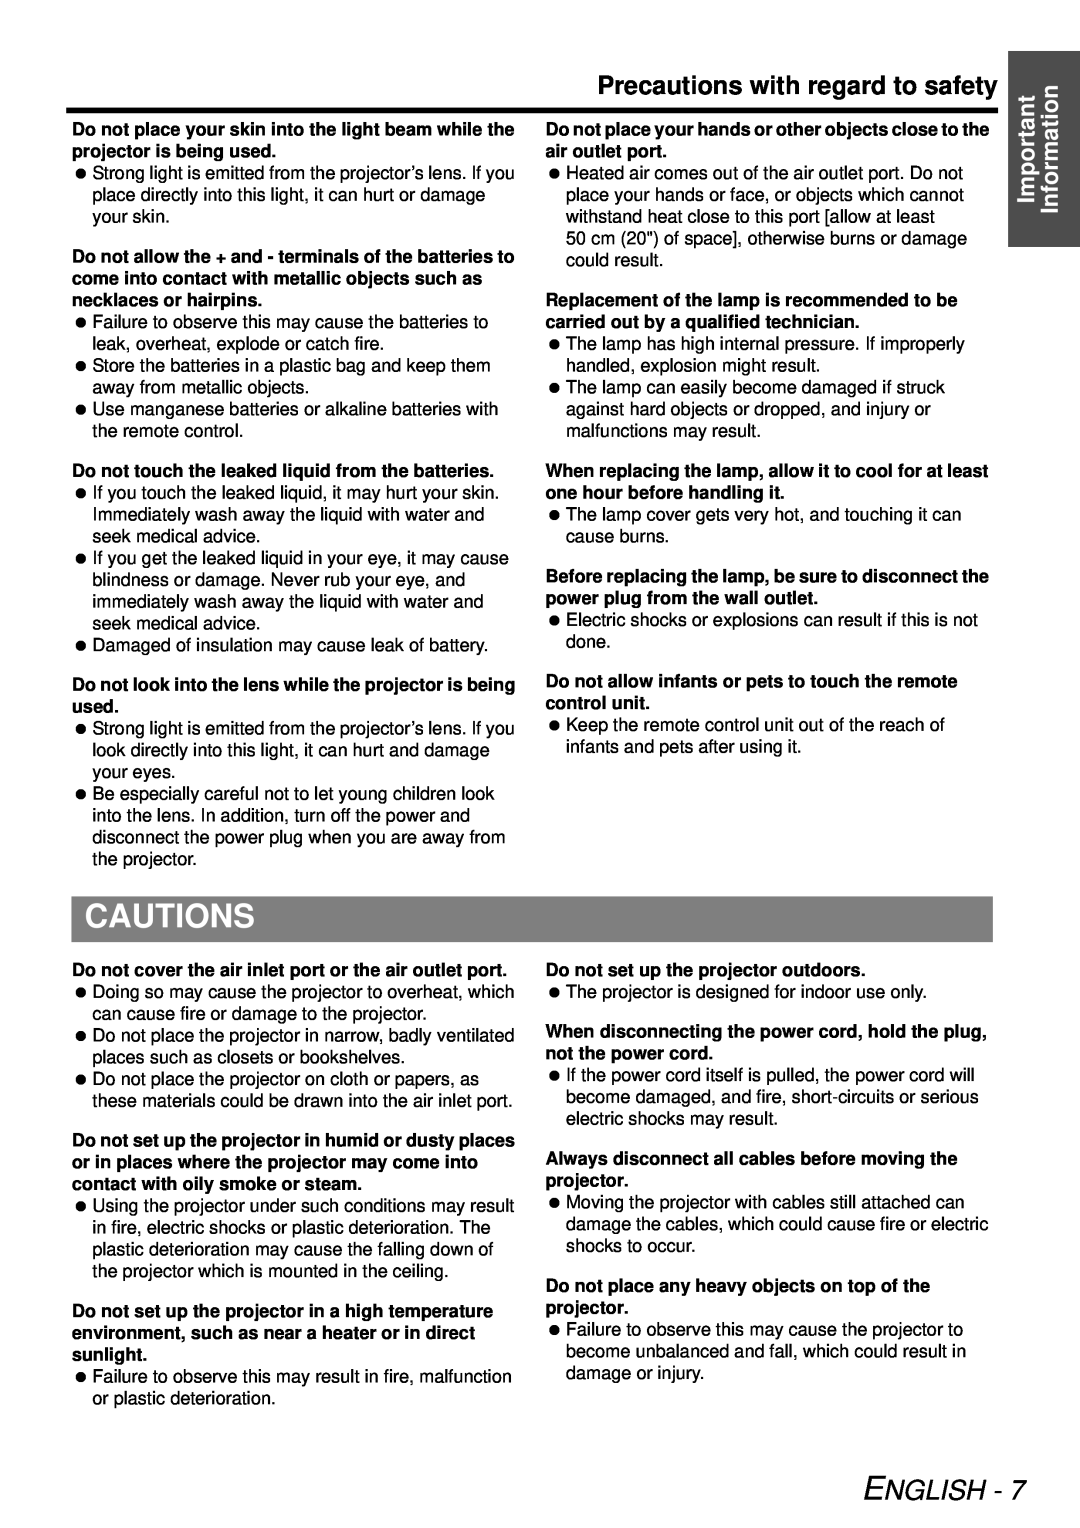 Panasonic PT-LB78U manual Cautions, Precautions with regard to safety, English 